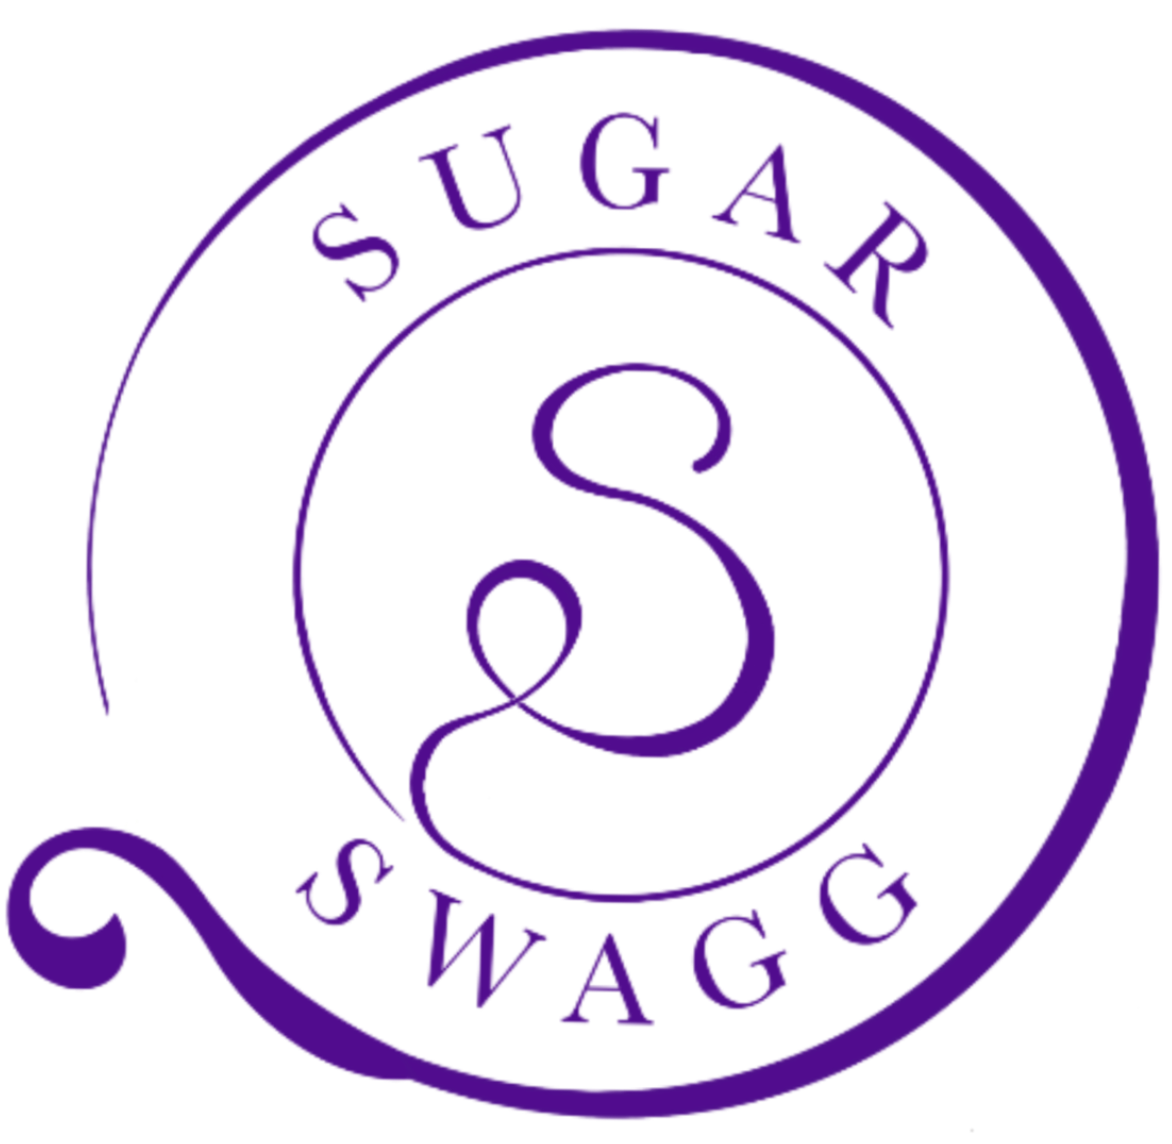 Sugar Swagg